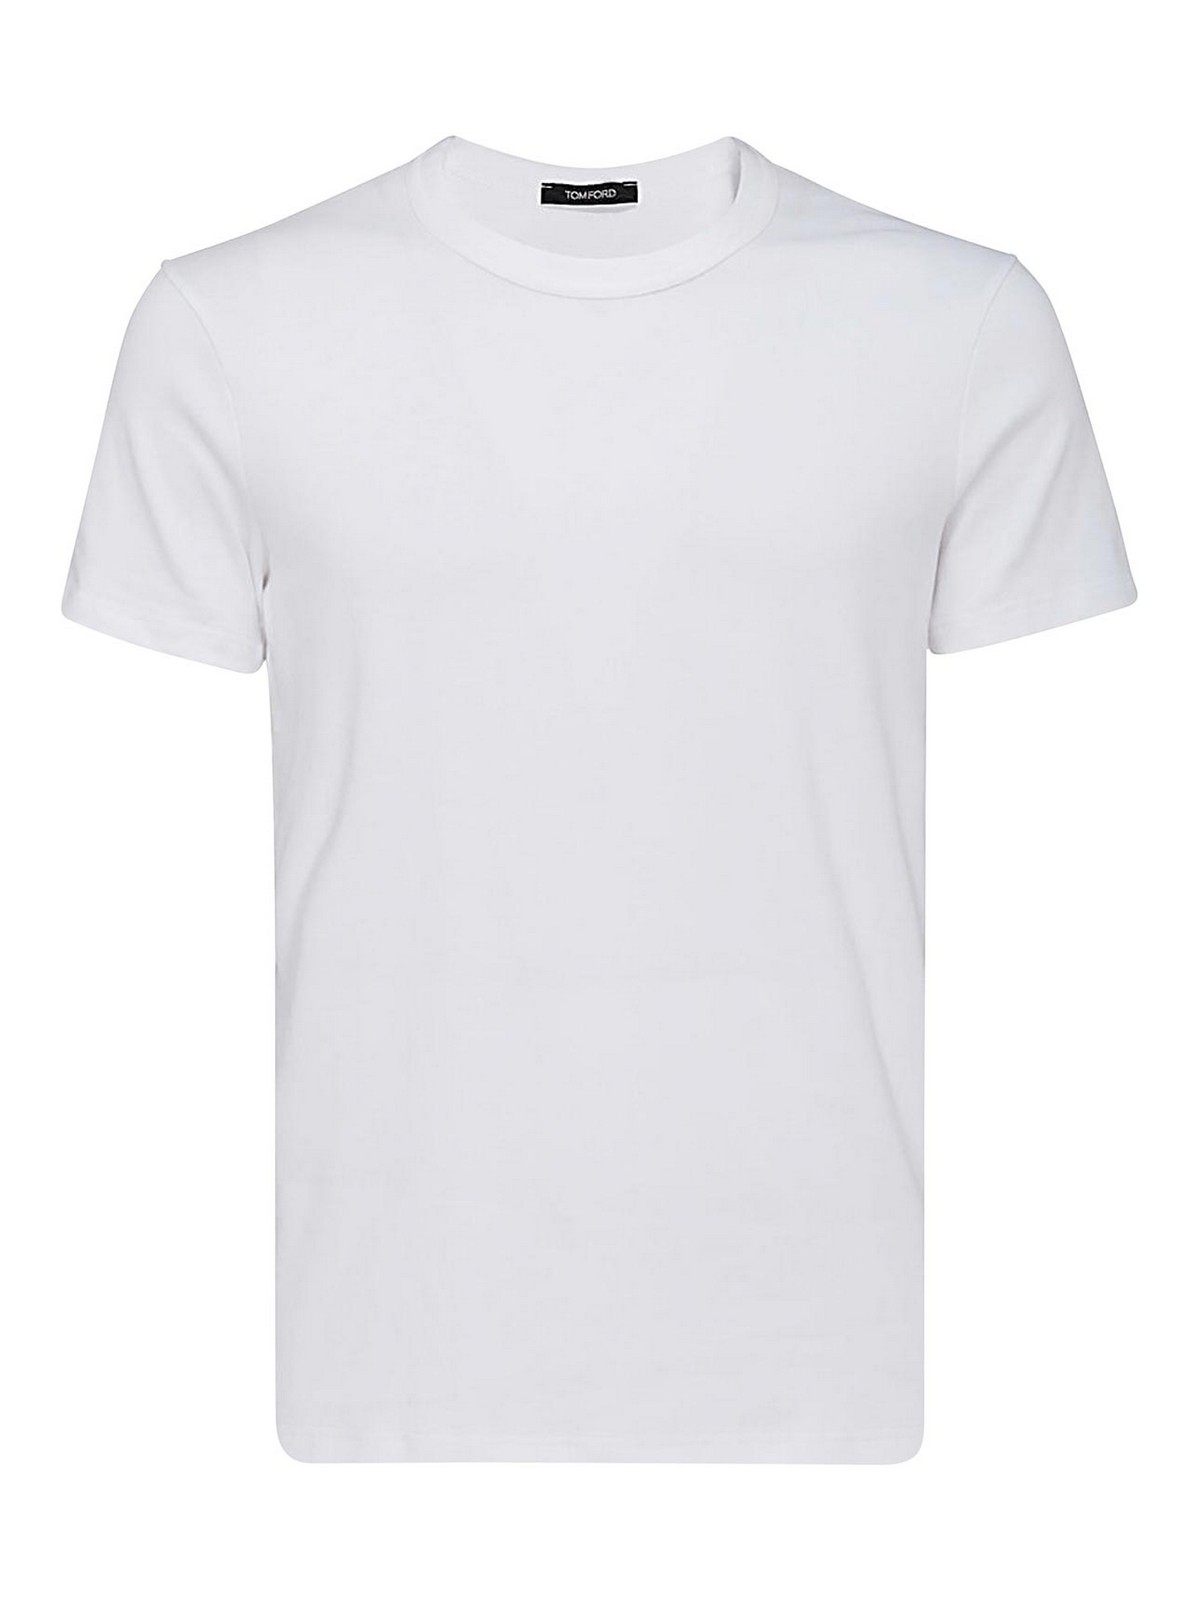 Tom Ford White Cotton T-shirt